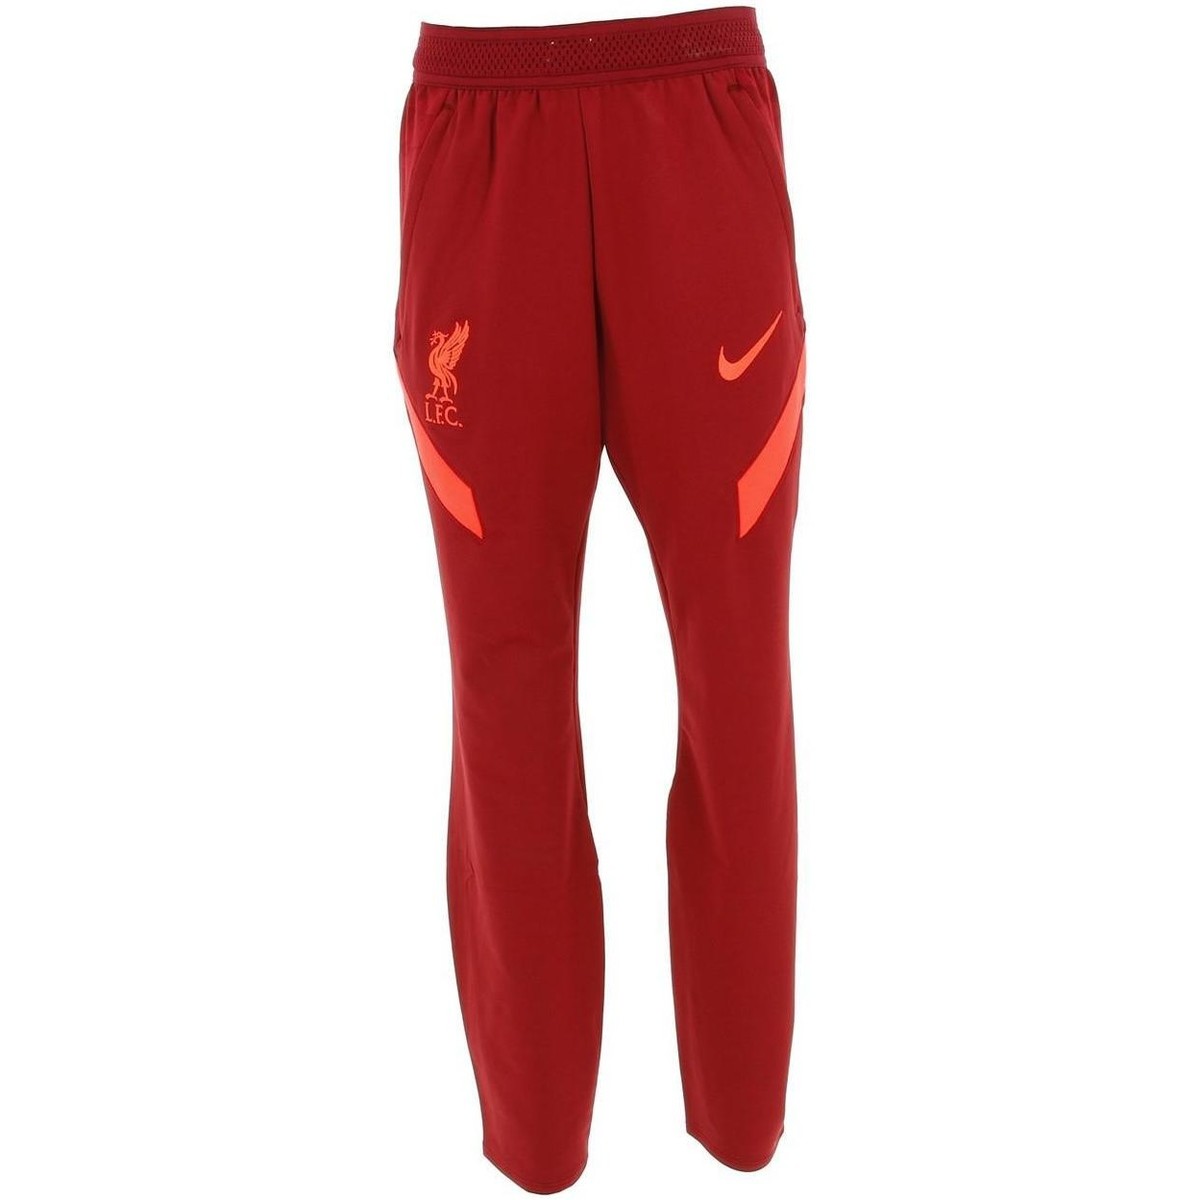 Nike Rouge Liverpool pant jr 2021.22 lfc 4fLtsBk0